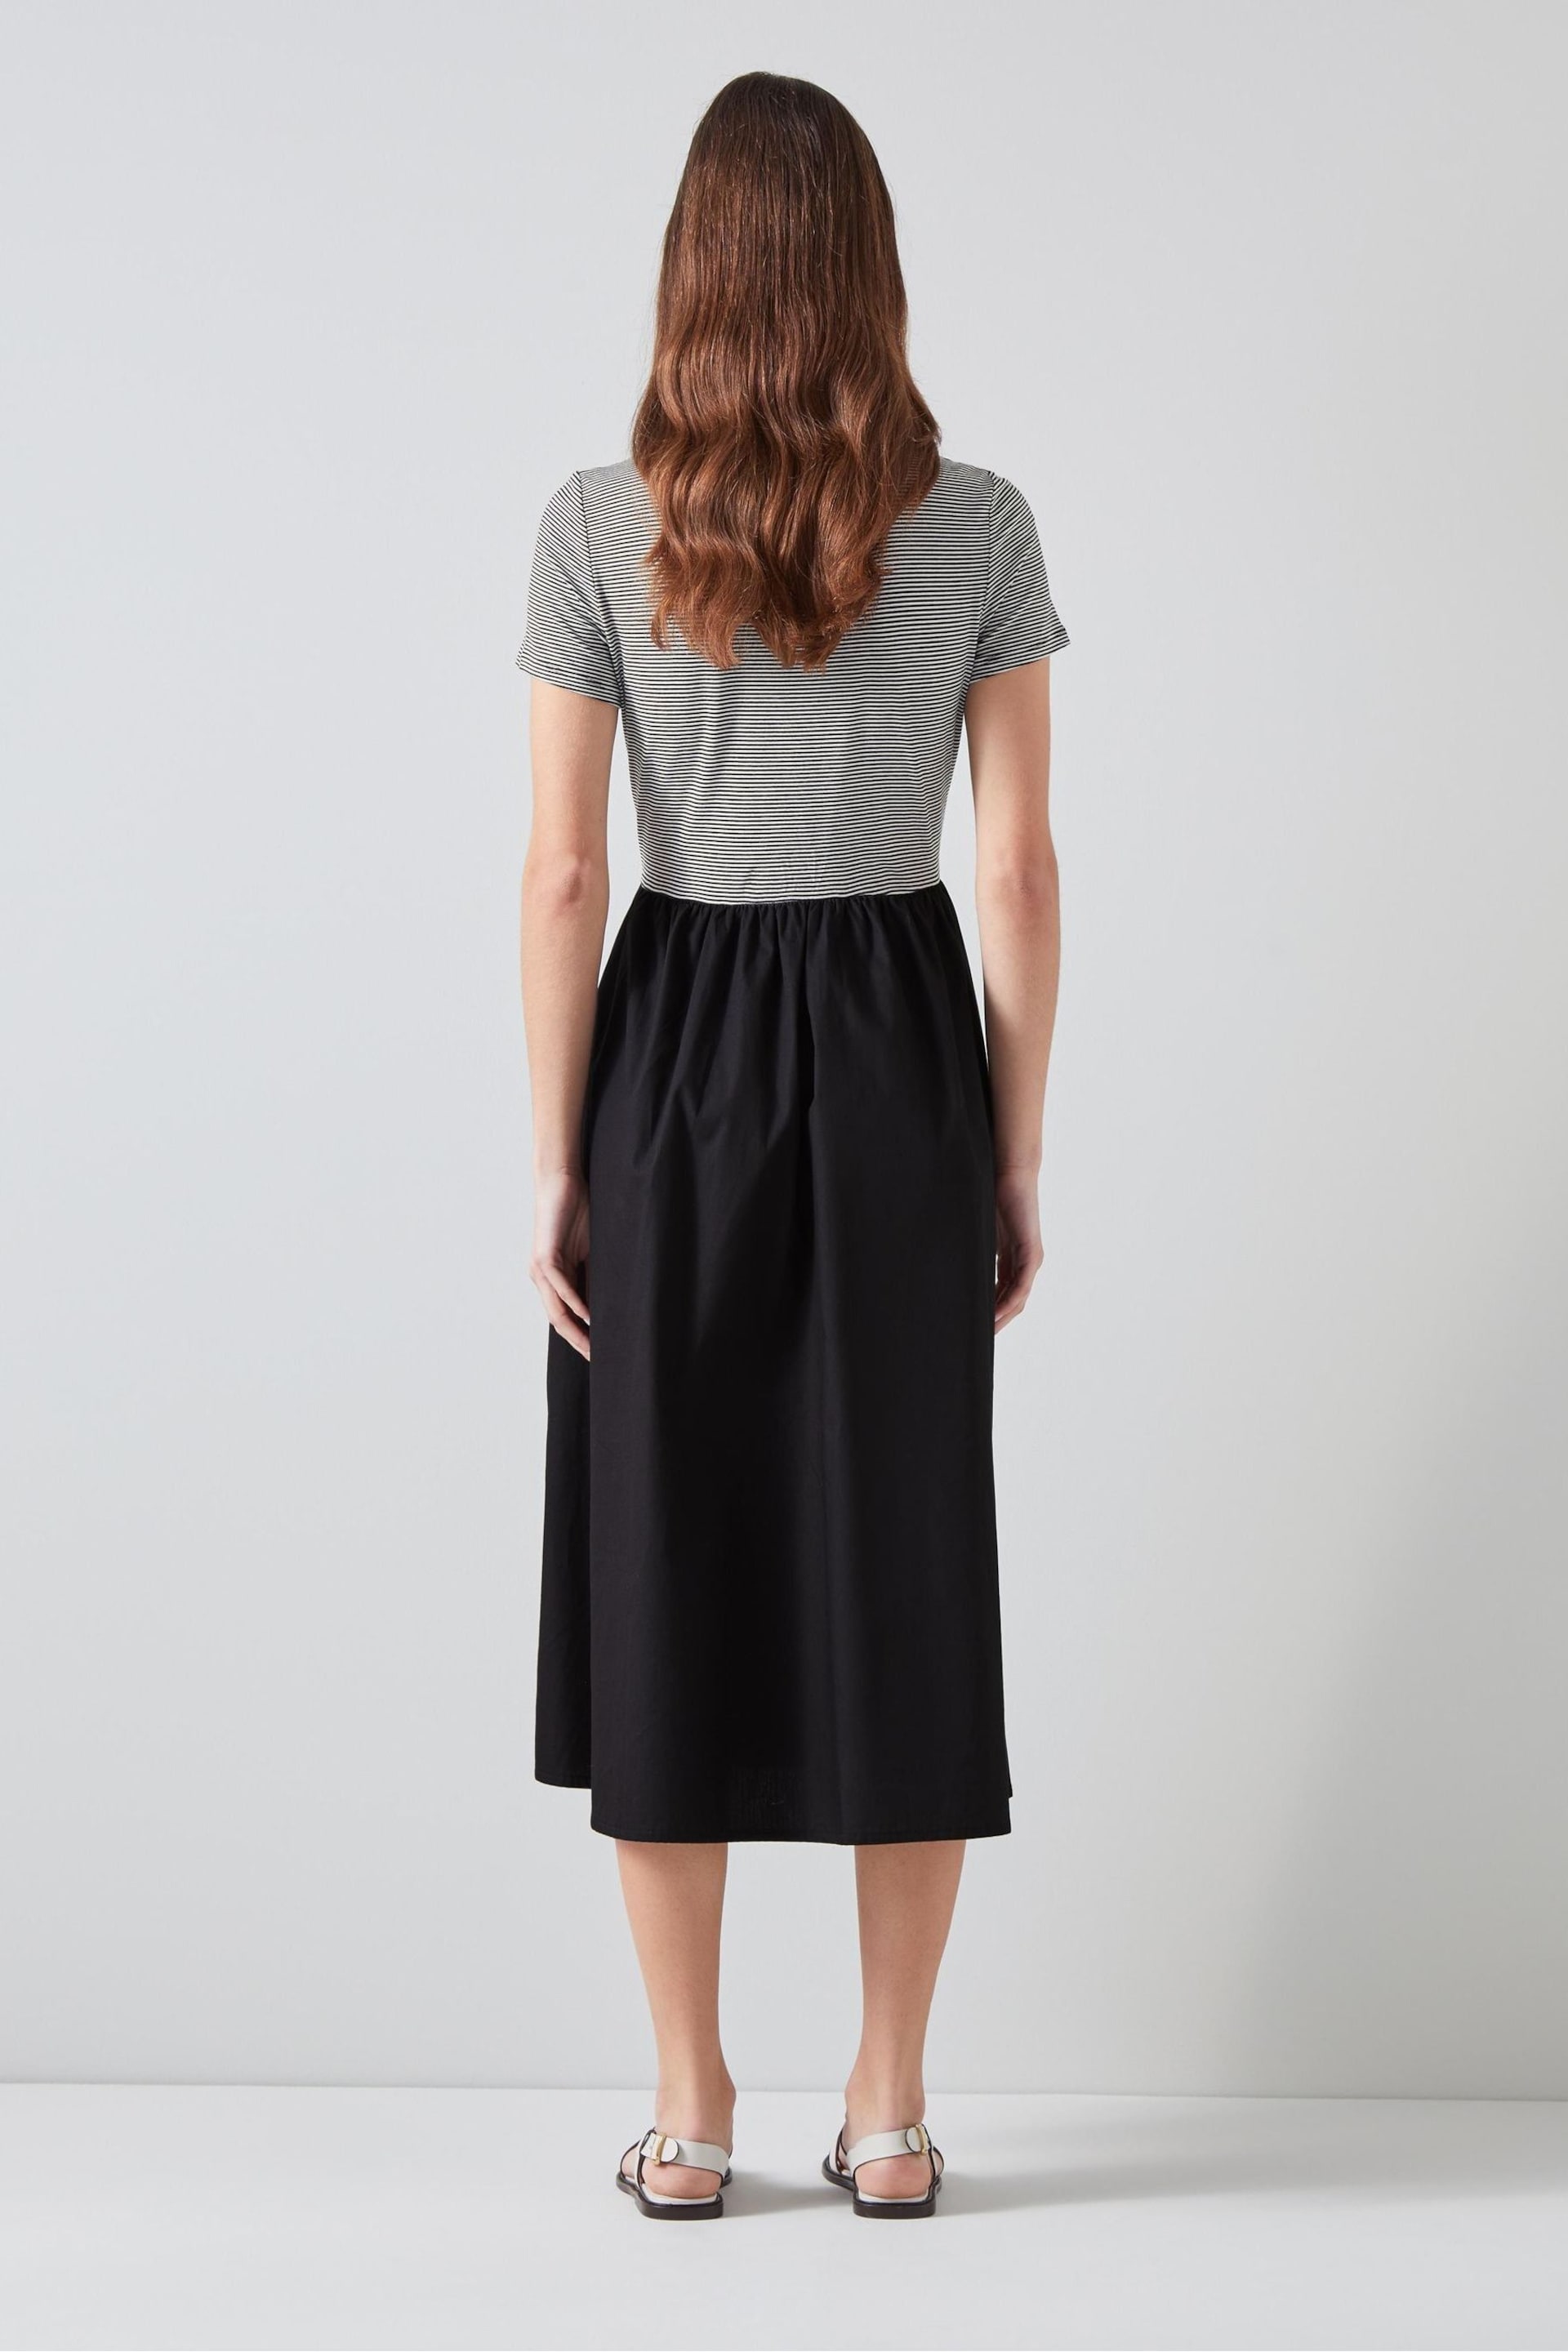 LK Bennett Serina Cotton Lenzing™ Ecovero™ Viscose Blend Dress - Image 2 of 3